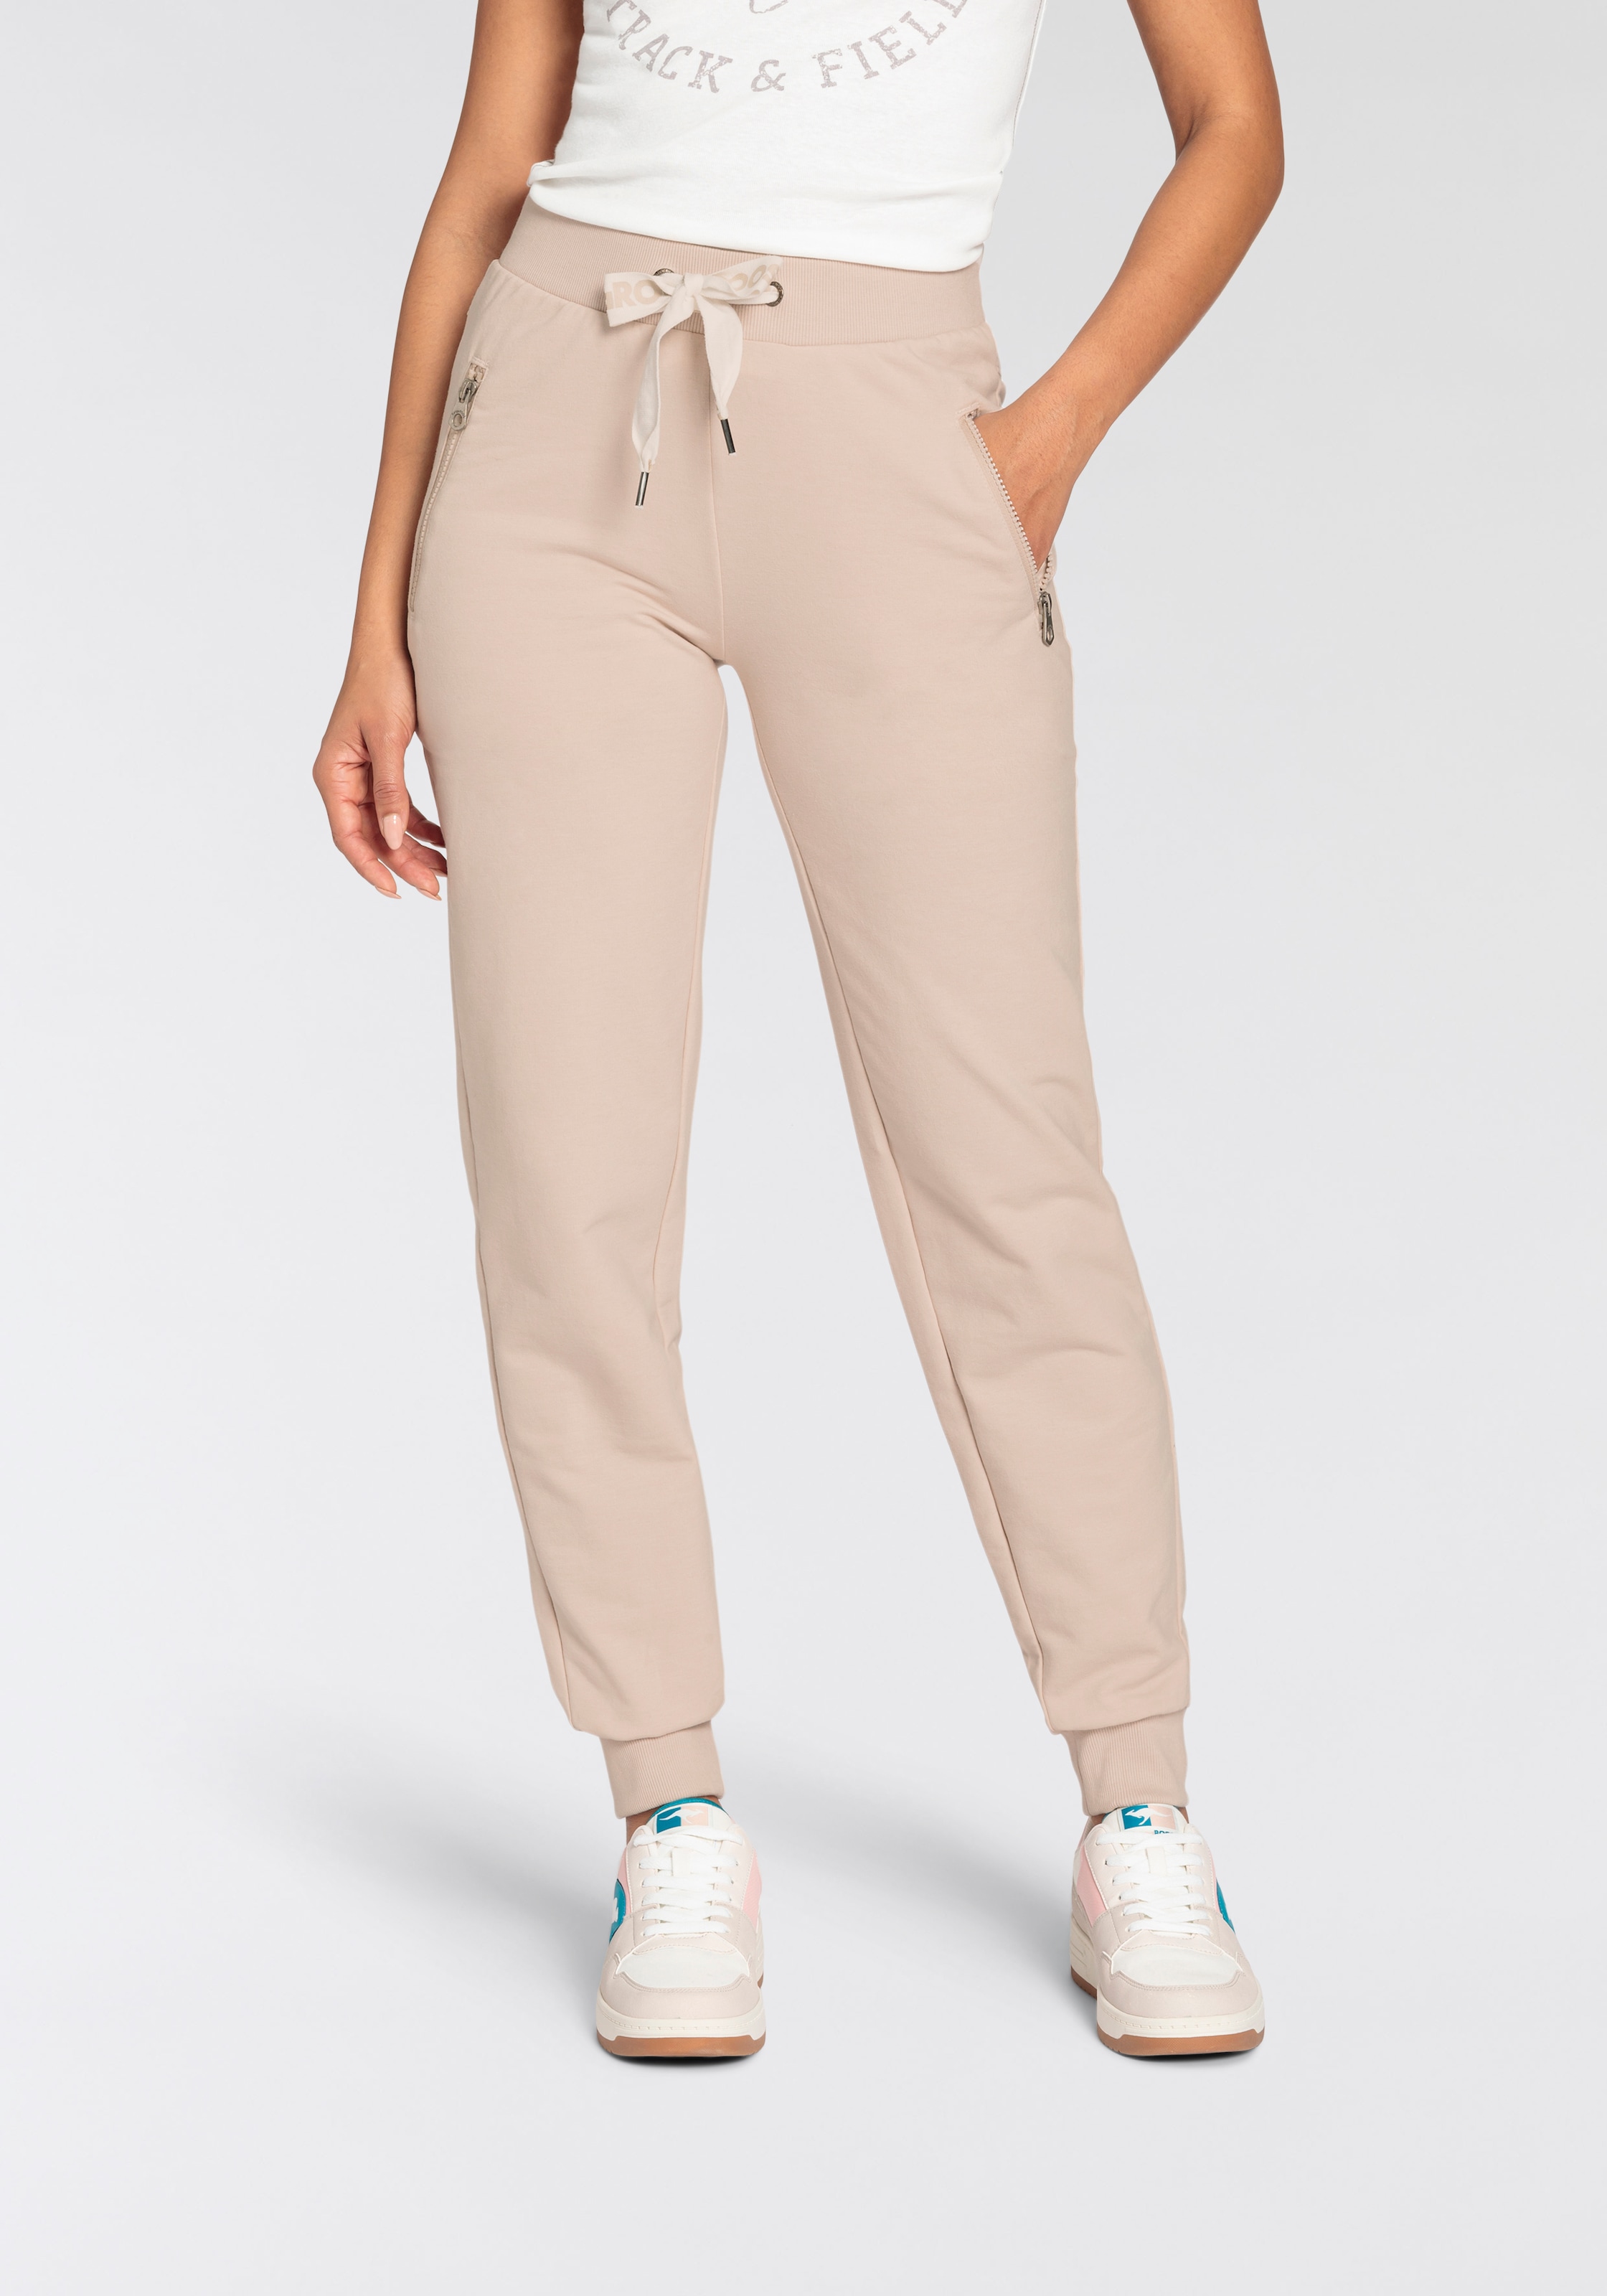 I\'m -NEUE Logo Zippertaschen Pants, online walking Jogger und KOLLEKTION Sweatpants KangaROOS mit | String kaufen